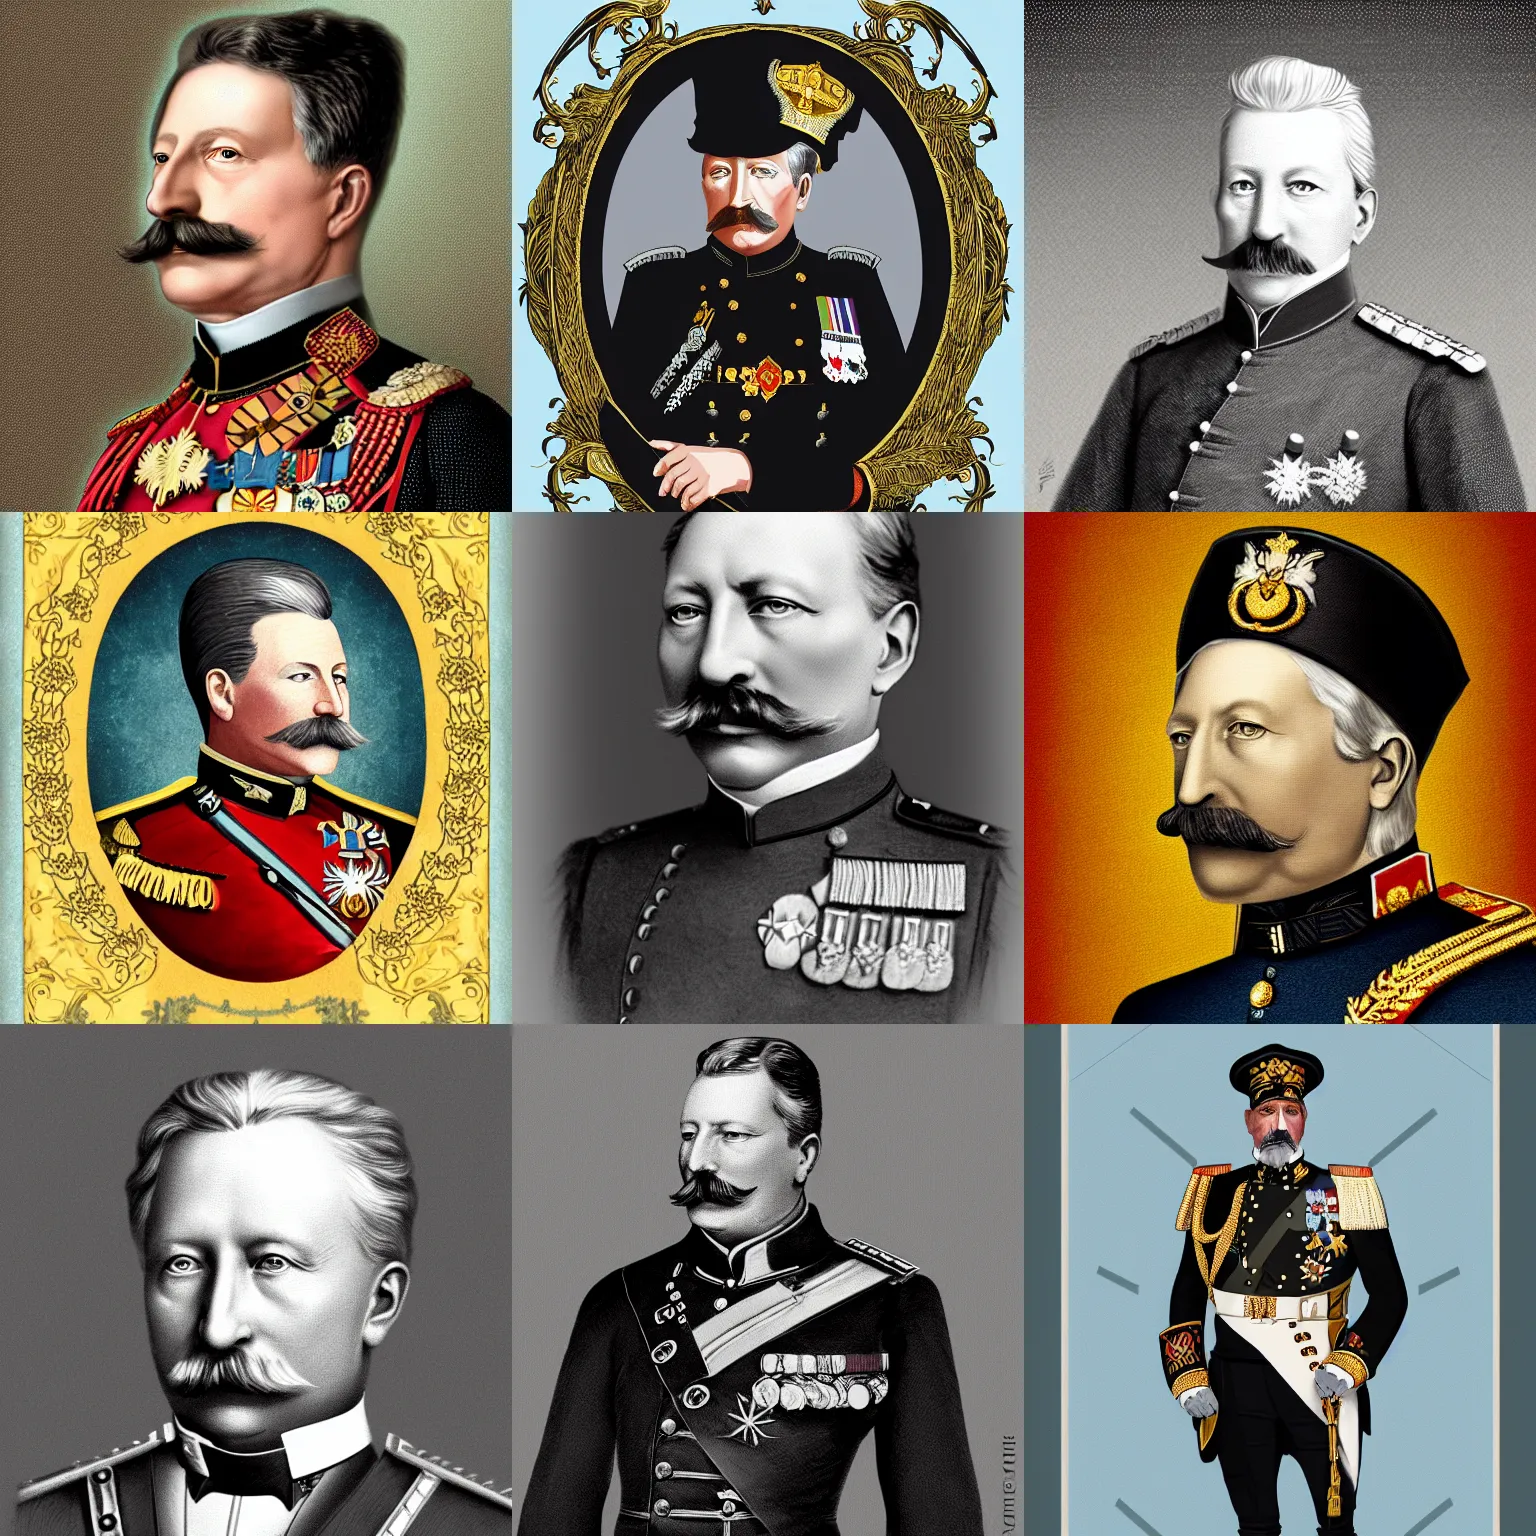 Prompt: An illustration of The Emperor Wilhelm II of Germany, German Emperor, illustration by Sam Kalda, digital art